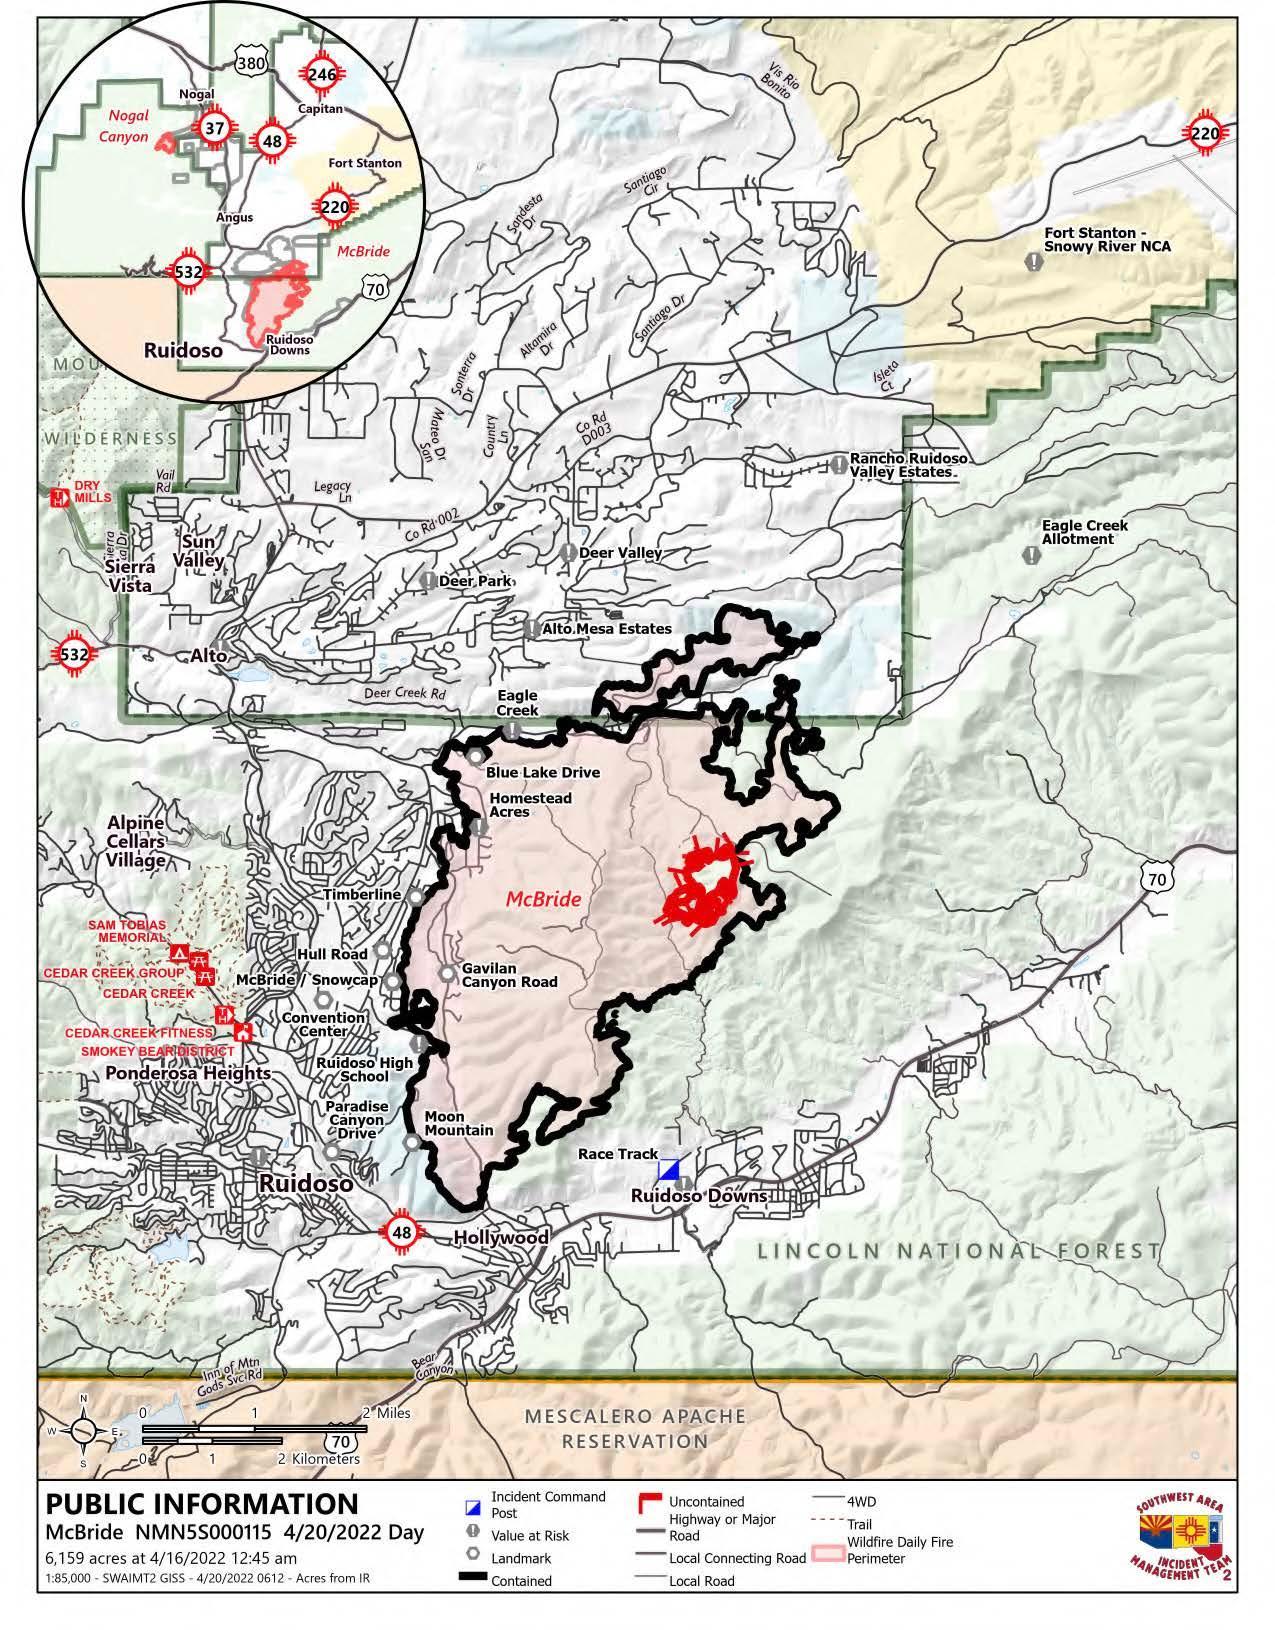 McBride Fire Map April 20, 2022